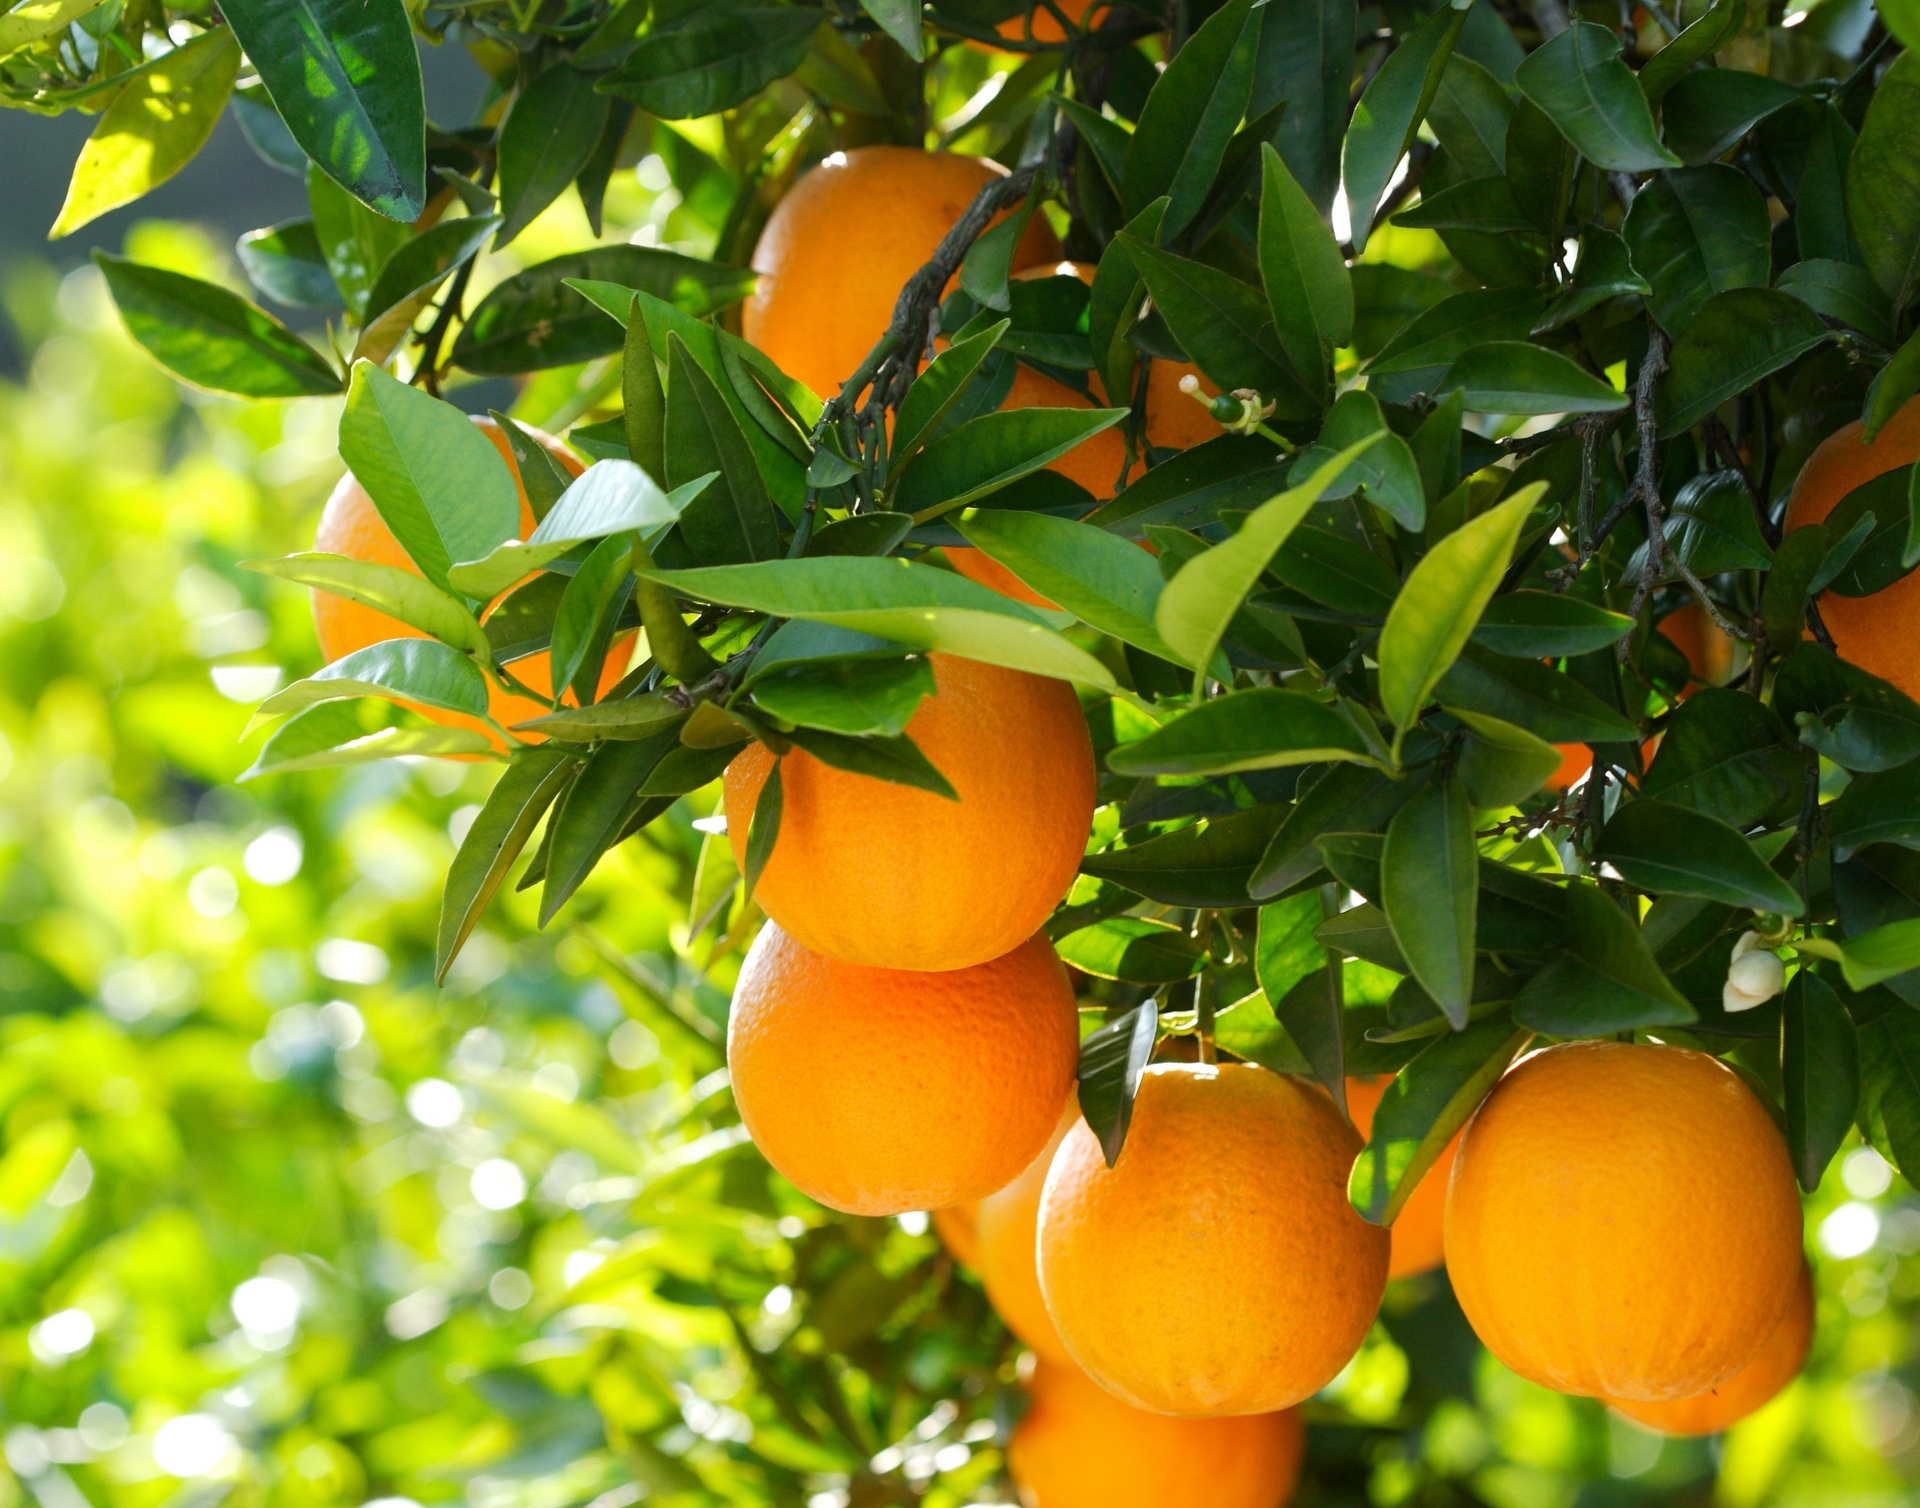 На дереве висят мандарины. Апельсин Гамлин. Мандарин померанец. Цитрус каламондин (плоды оранжевые). Померанец дерево.